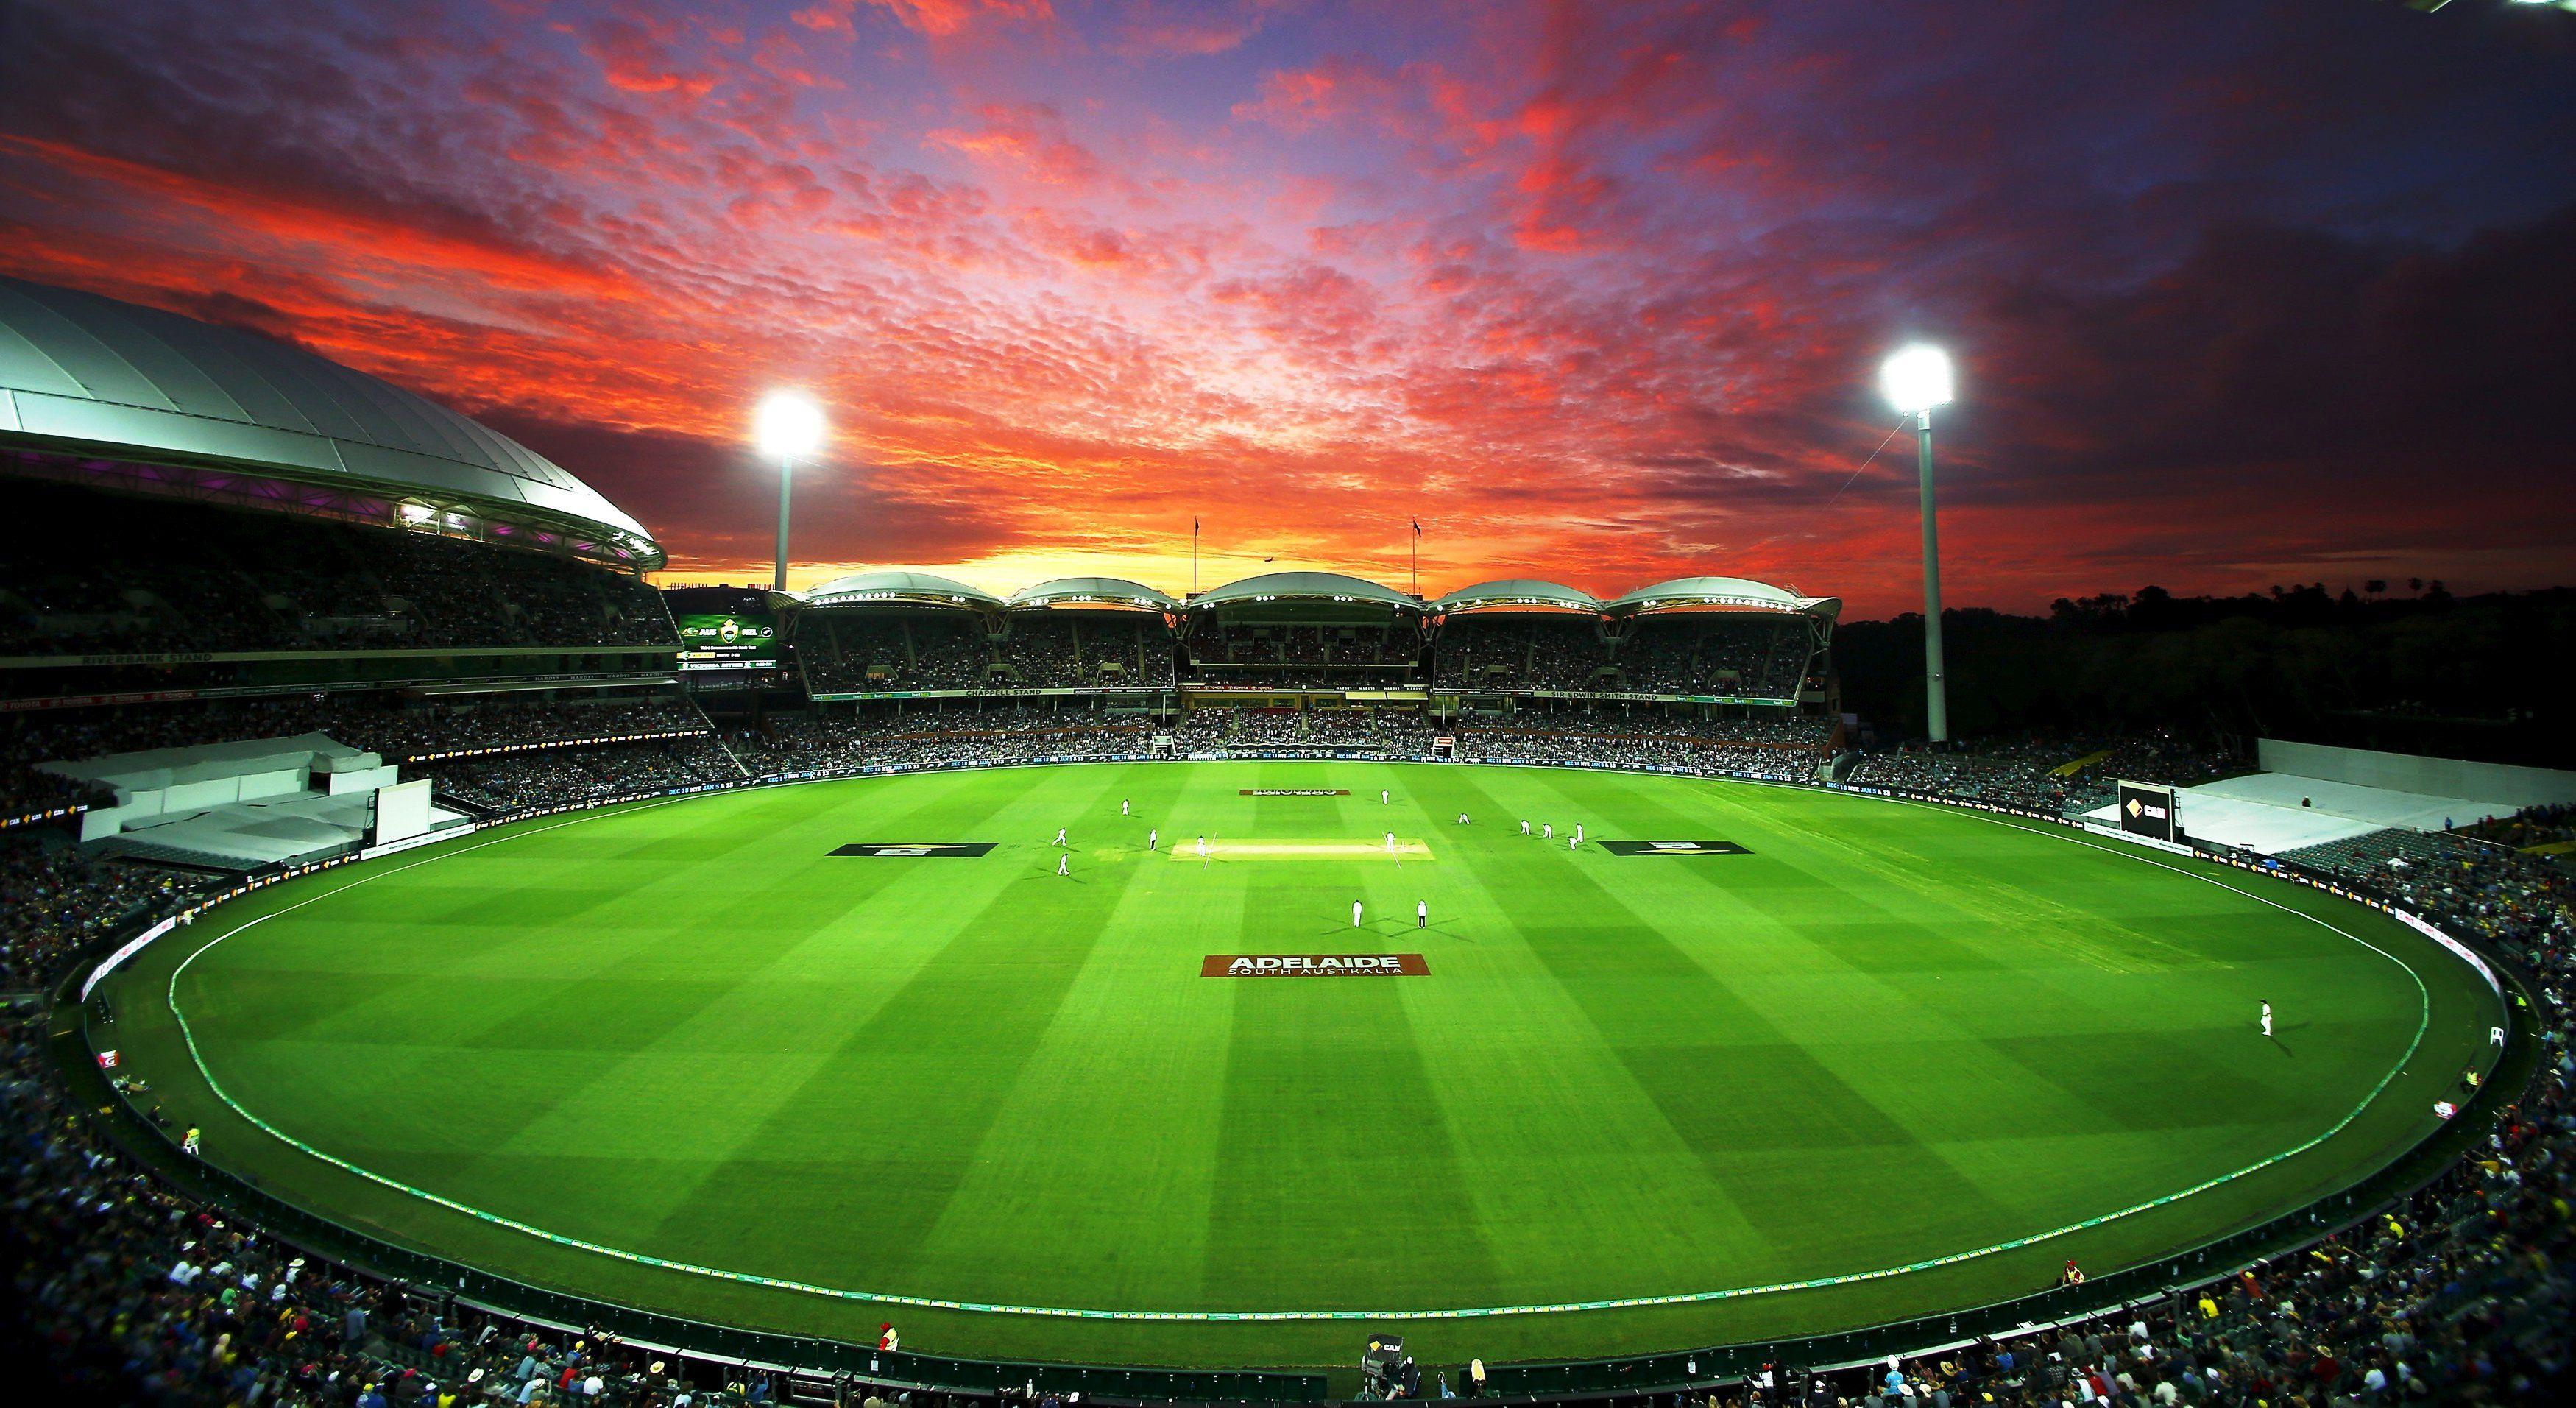 Cricket Stadium Background Images  Free Download on Freepik